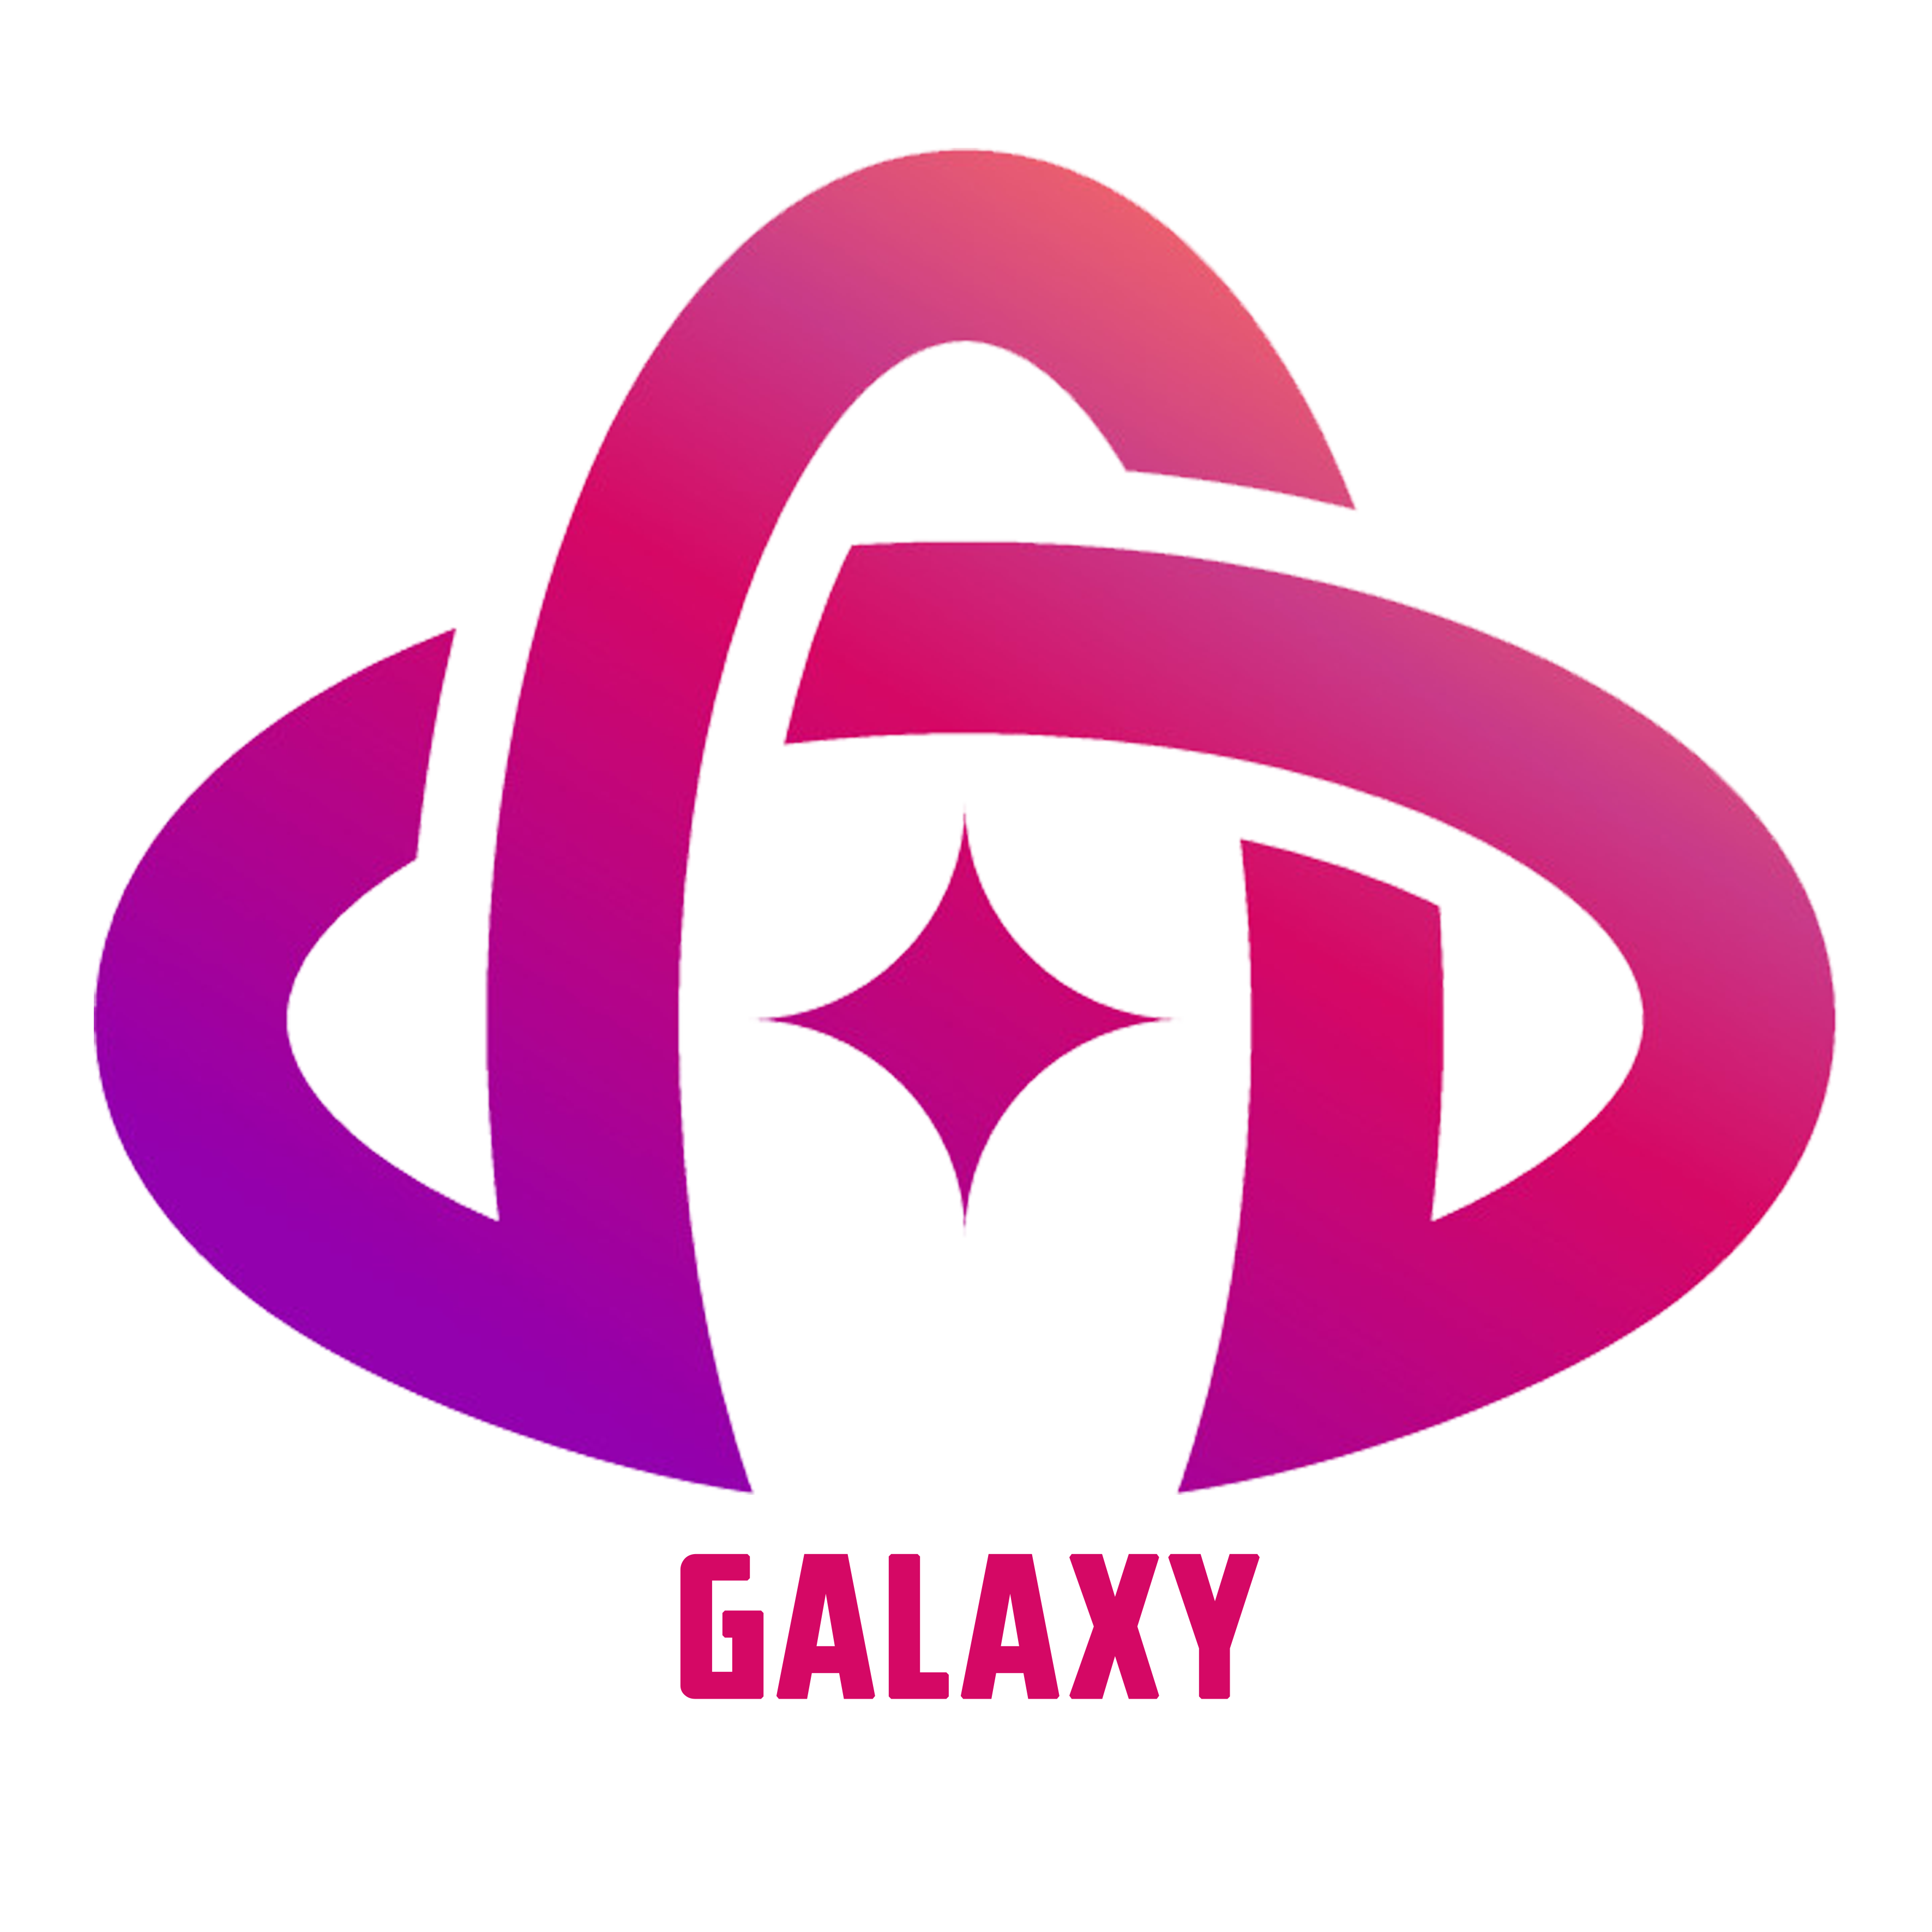 GALAXY EVENT & ENTERTAINMENT